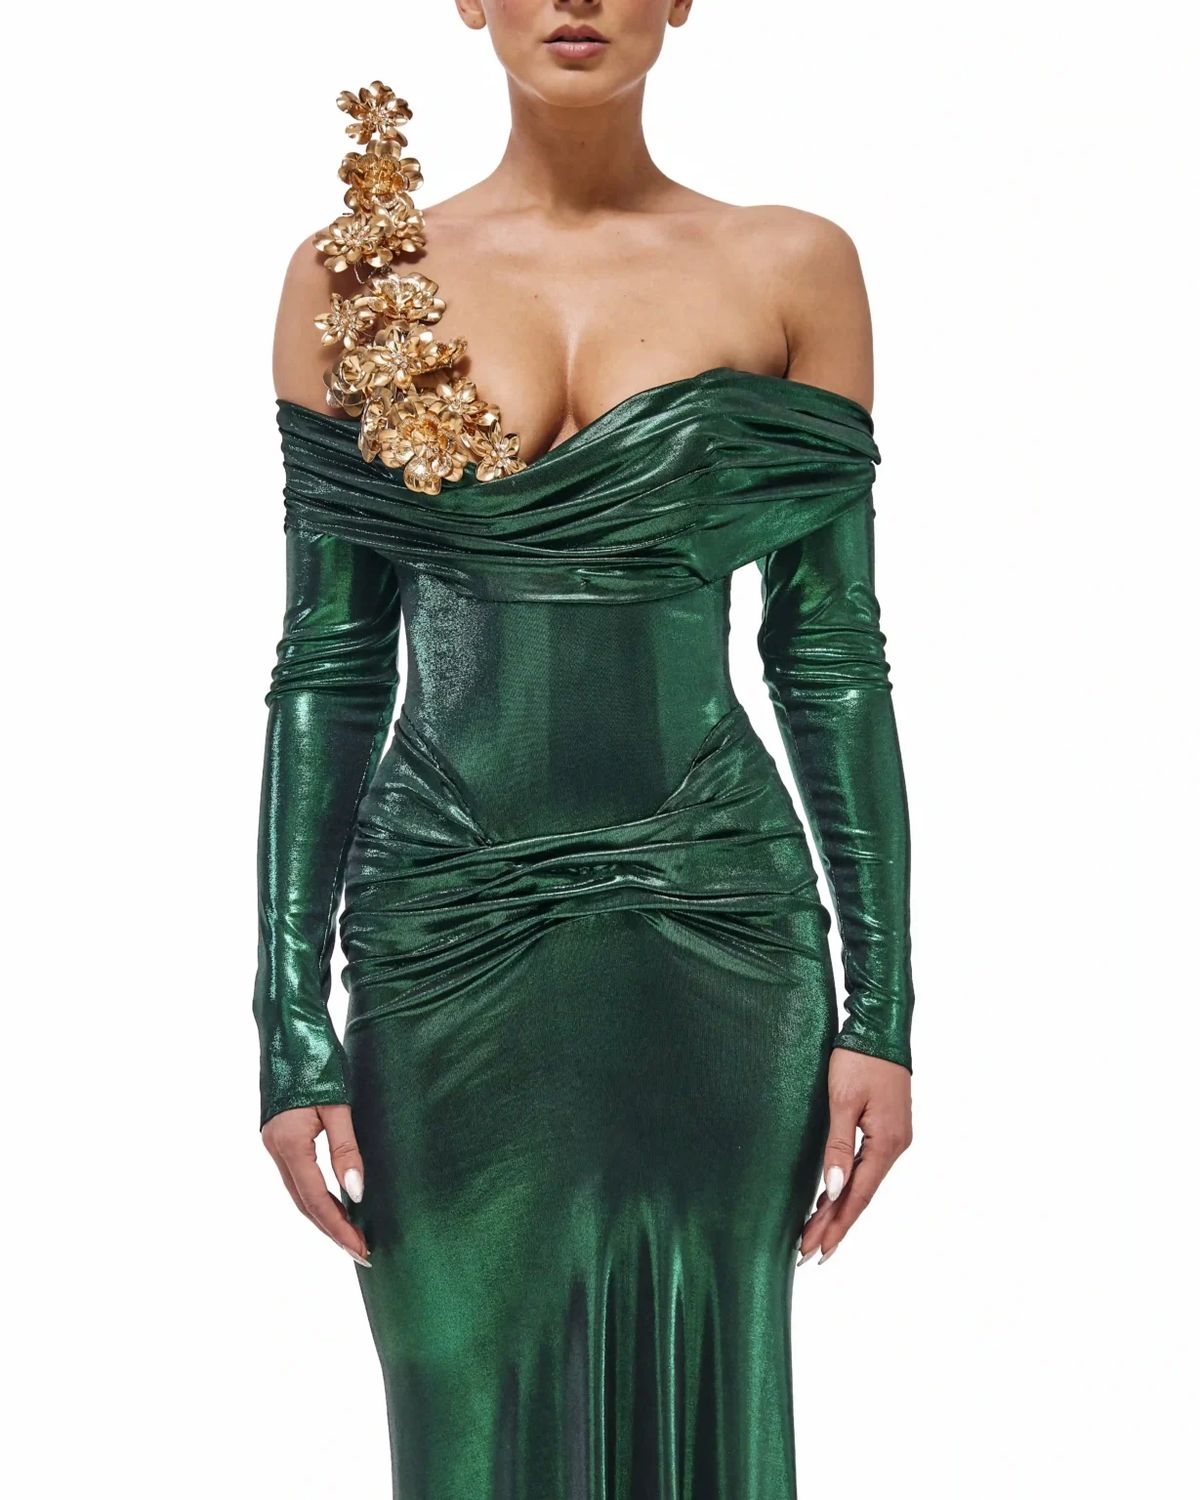 Style metallic-majesty-24-25 Valdrin Sahiti Size XS Pageant Green Mermaid Dress on Queenly